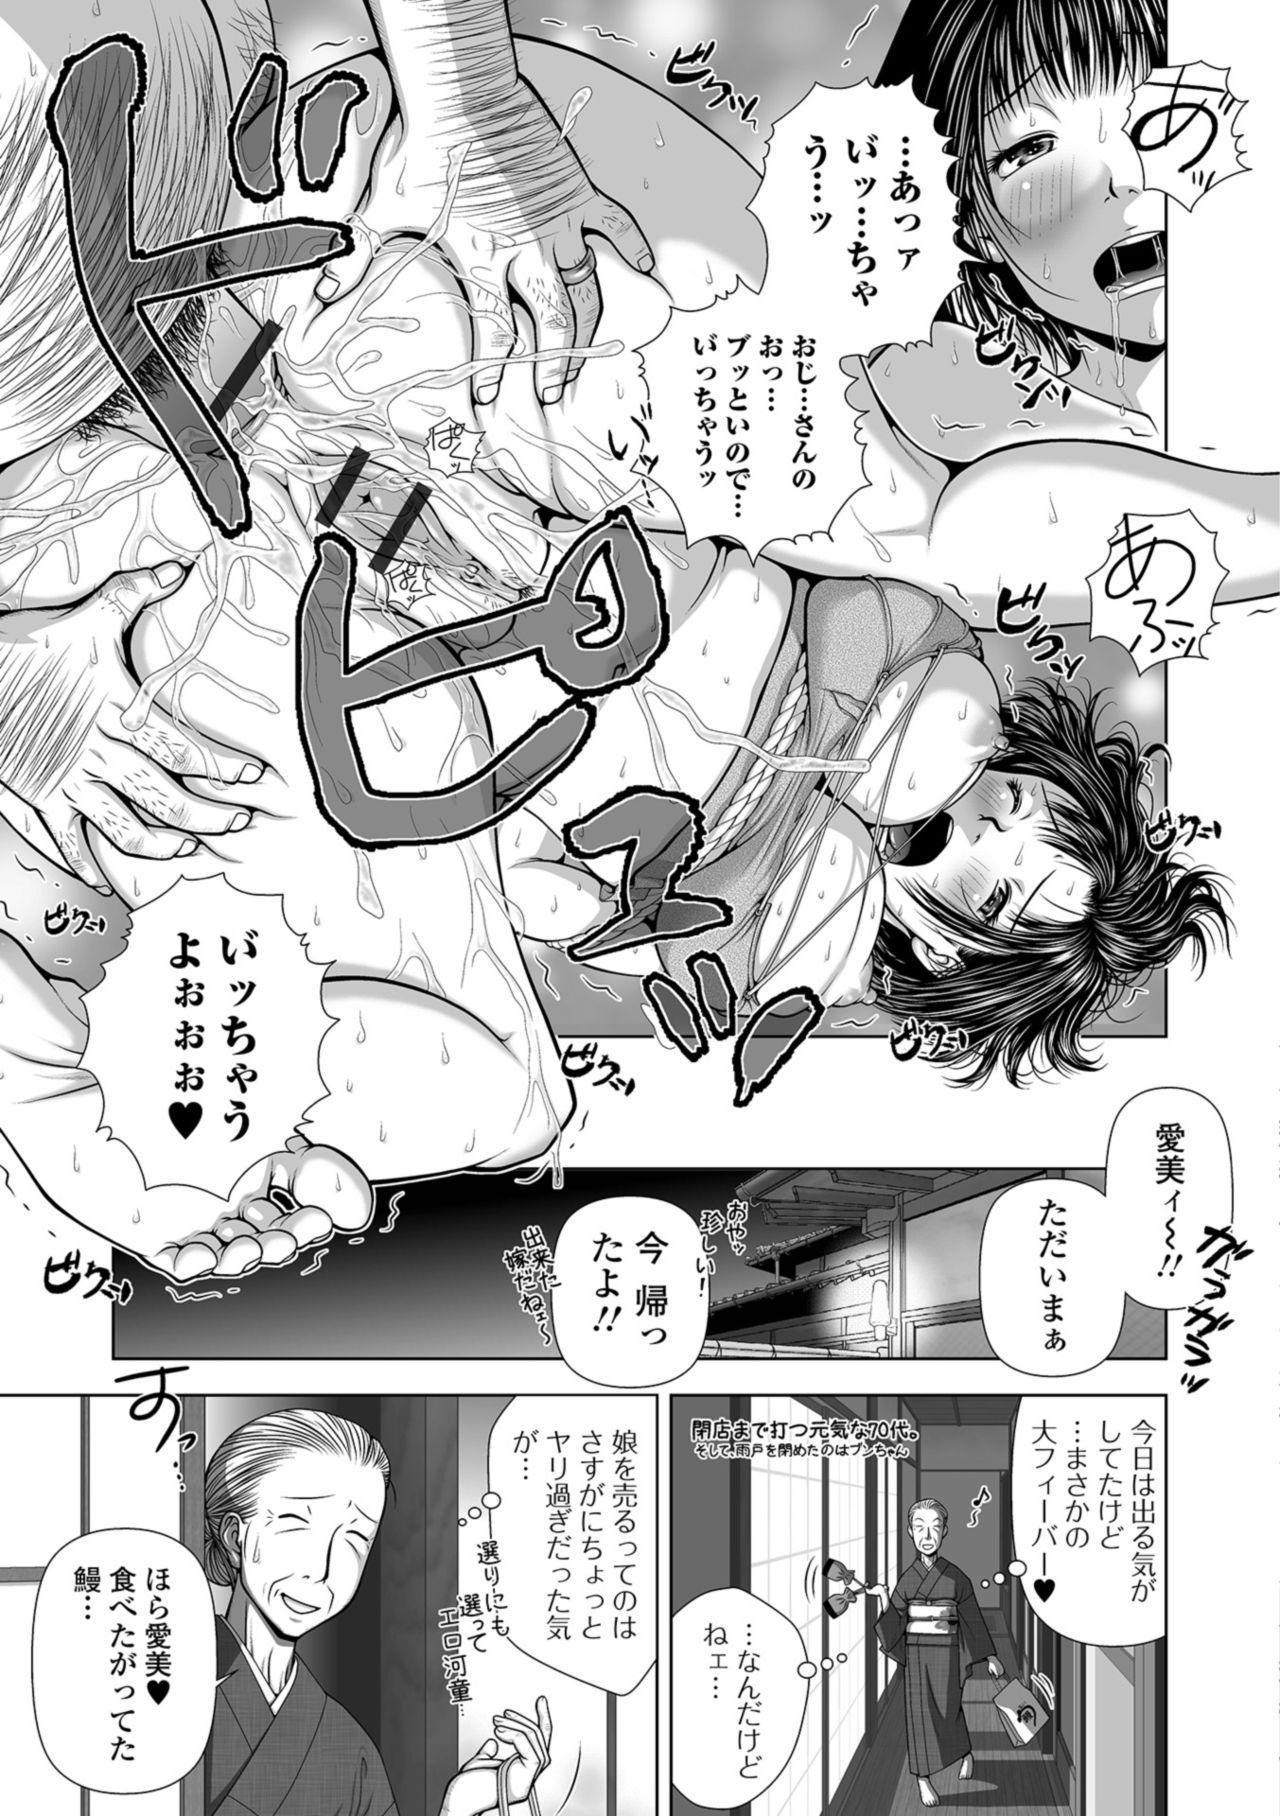 Seduction Web Comic Toutetsu Vol. 34 Sucks - Page 113